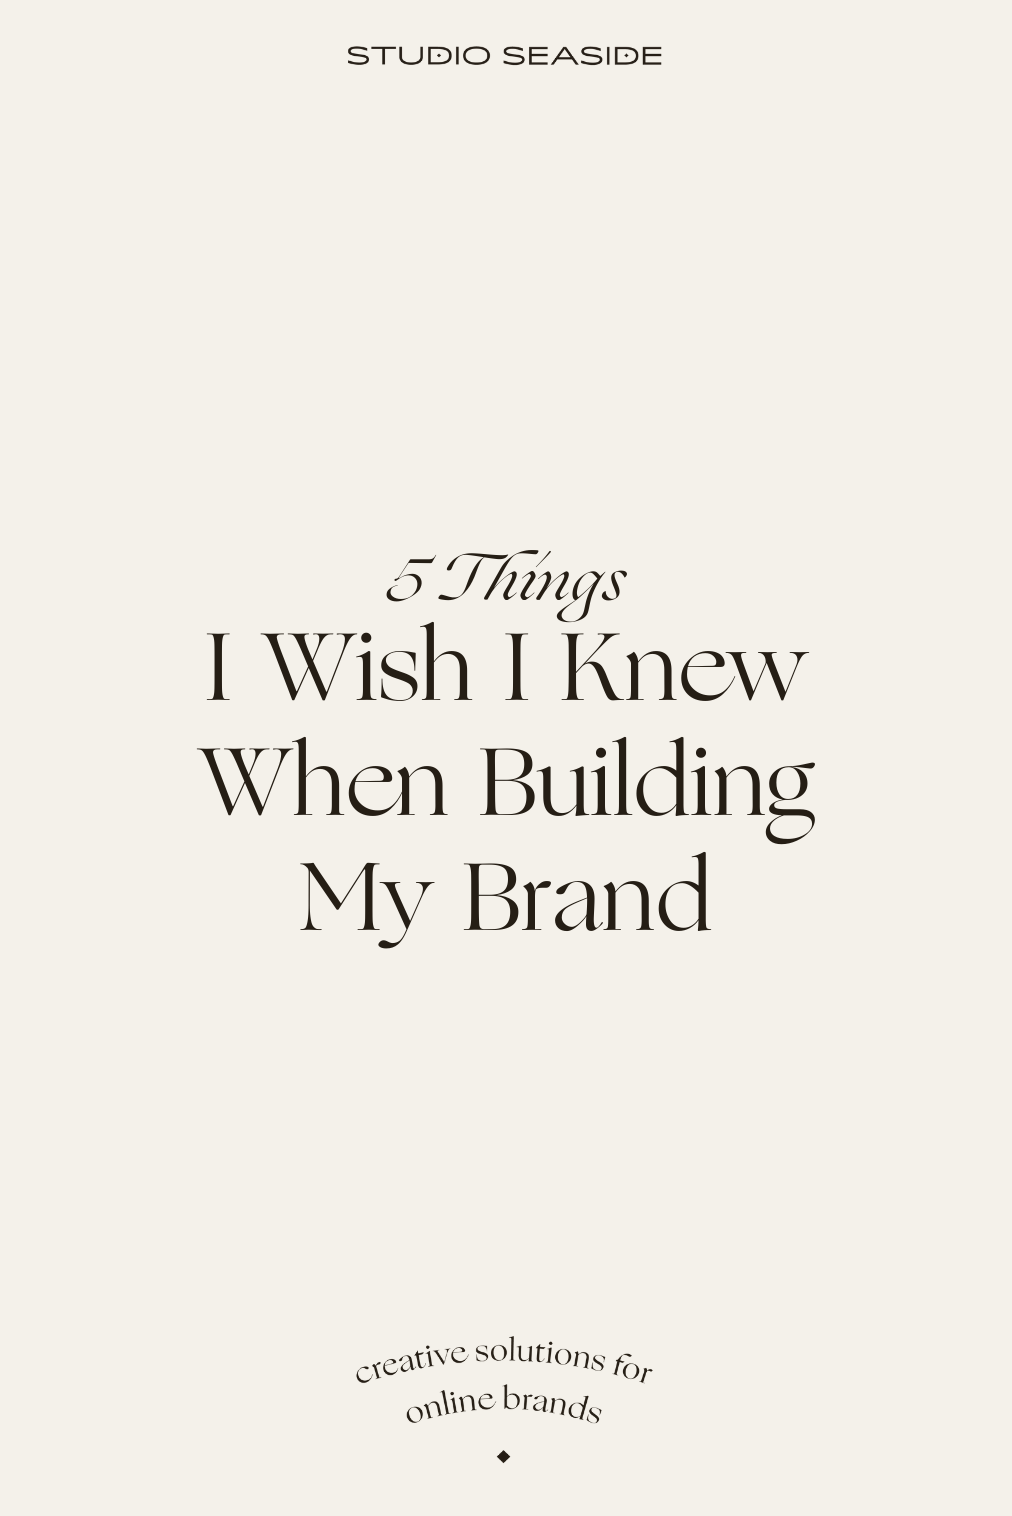 Mam Rot beroemd 5 Things I Wish I Knew When Building My Brand — Studio Seaside